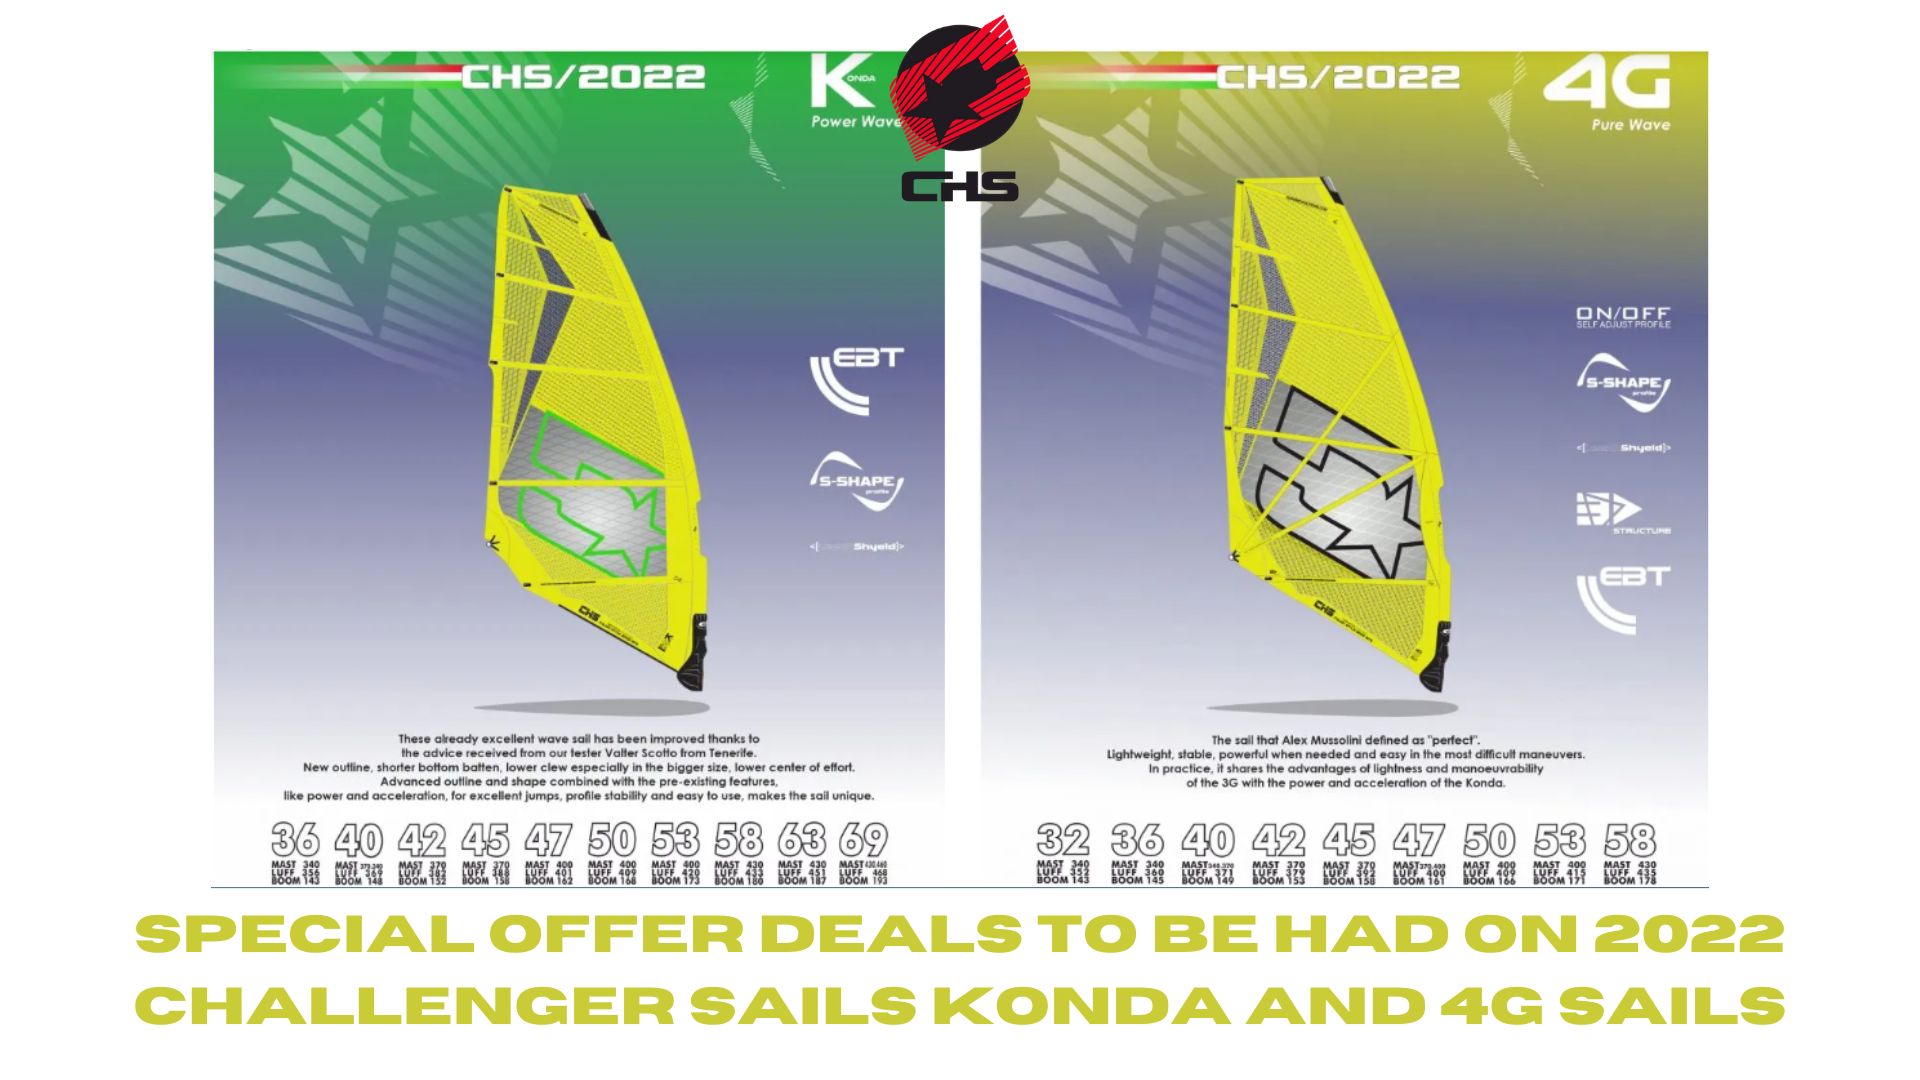 2022 special offer deals on Challenger Sails Konda and 4G sails.